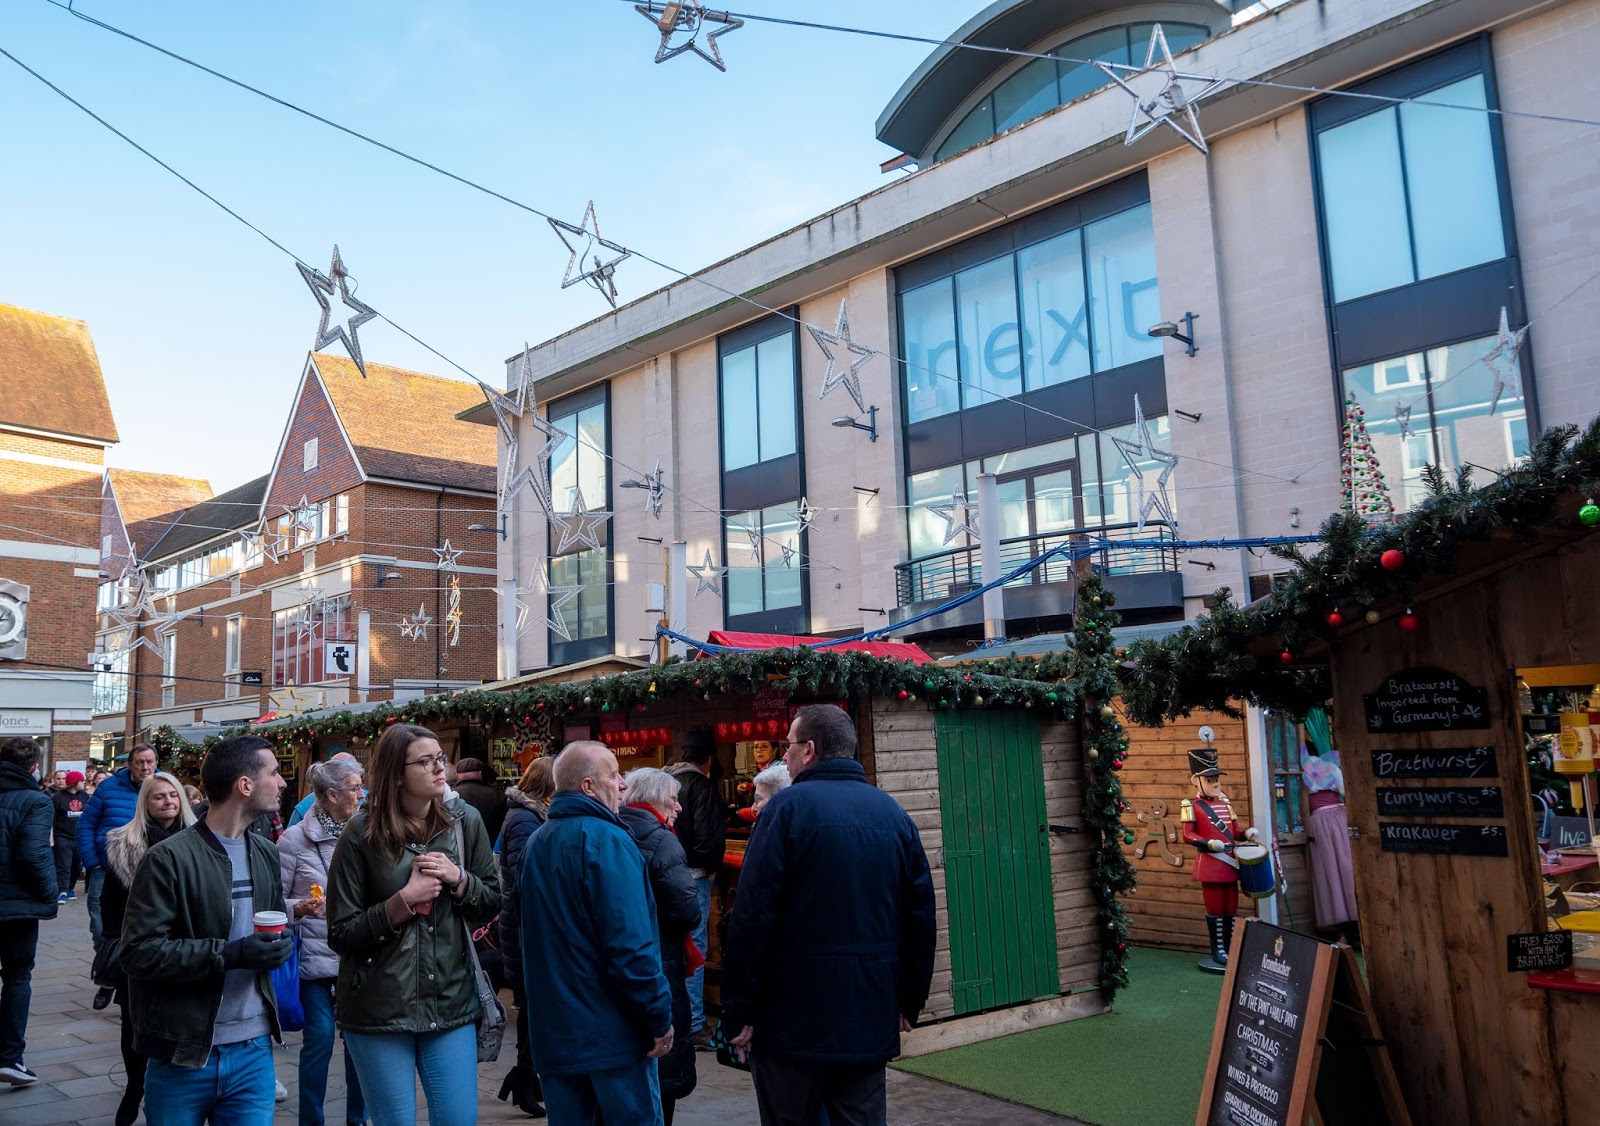 The 2019 Canterbury Christmas Market